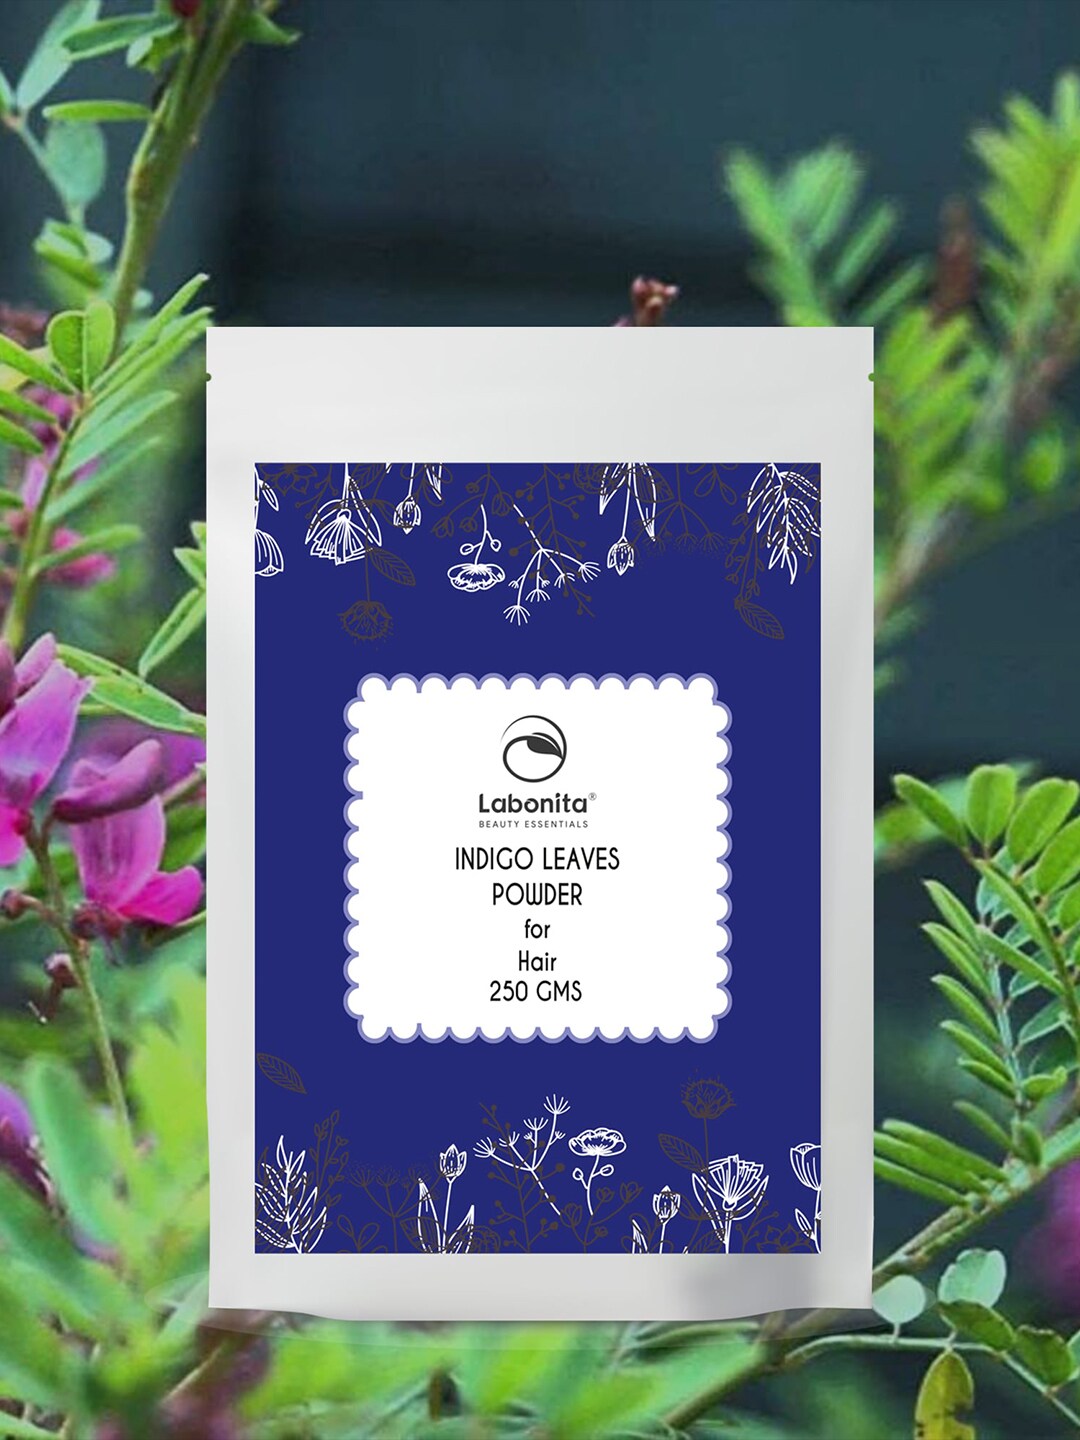 Labonita Indigo Leaves Powder For Hair - 250 g Price in India